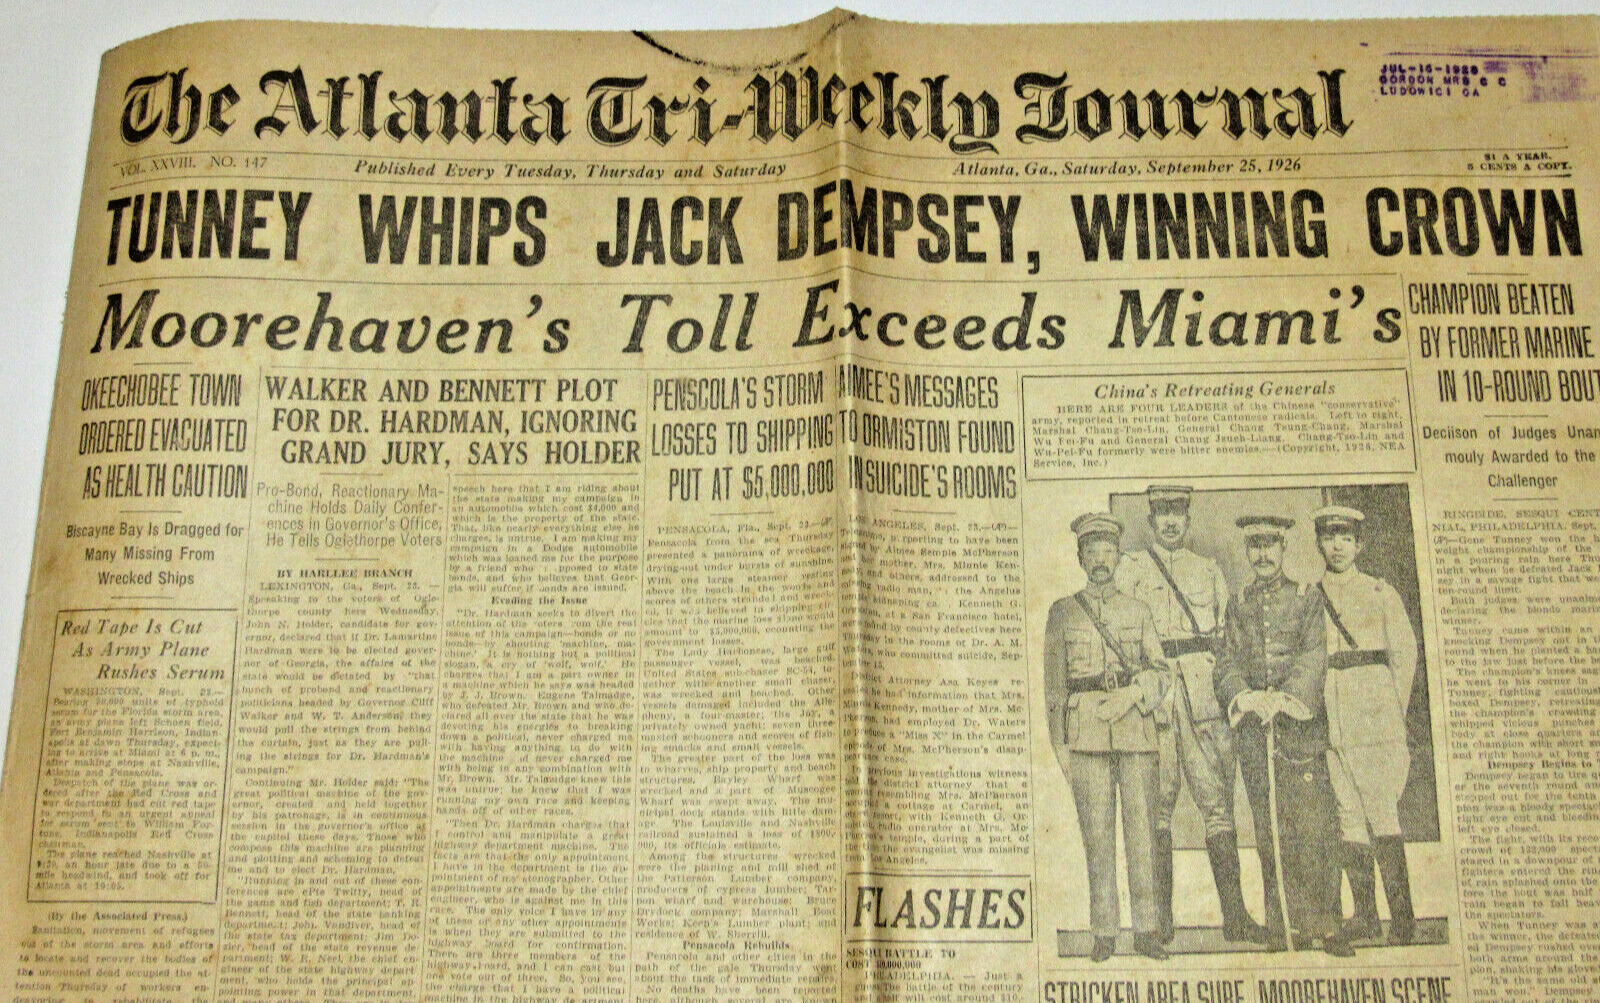 VTG ORIGINAL 1926 JACK DEMPSEY vs GENE TUNNEY BOXING MATCH NEWSPAPER HEADLINE